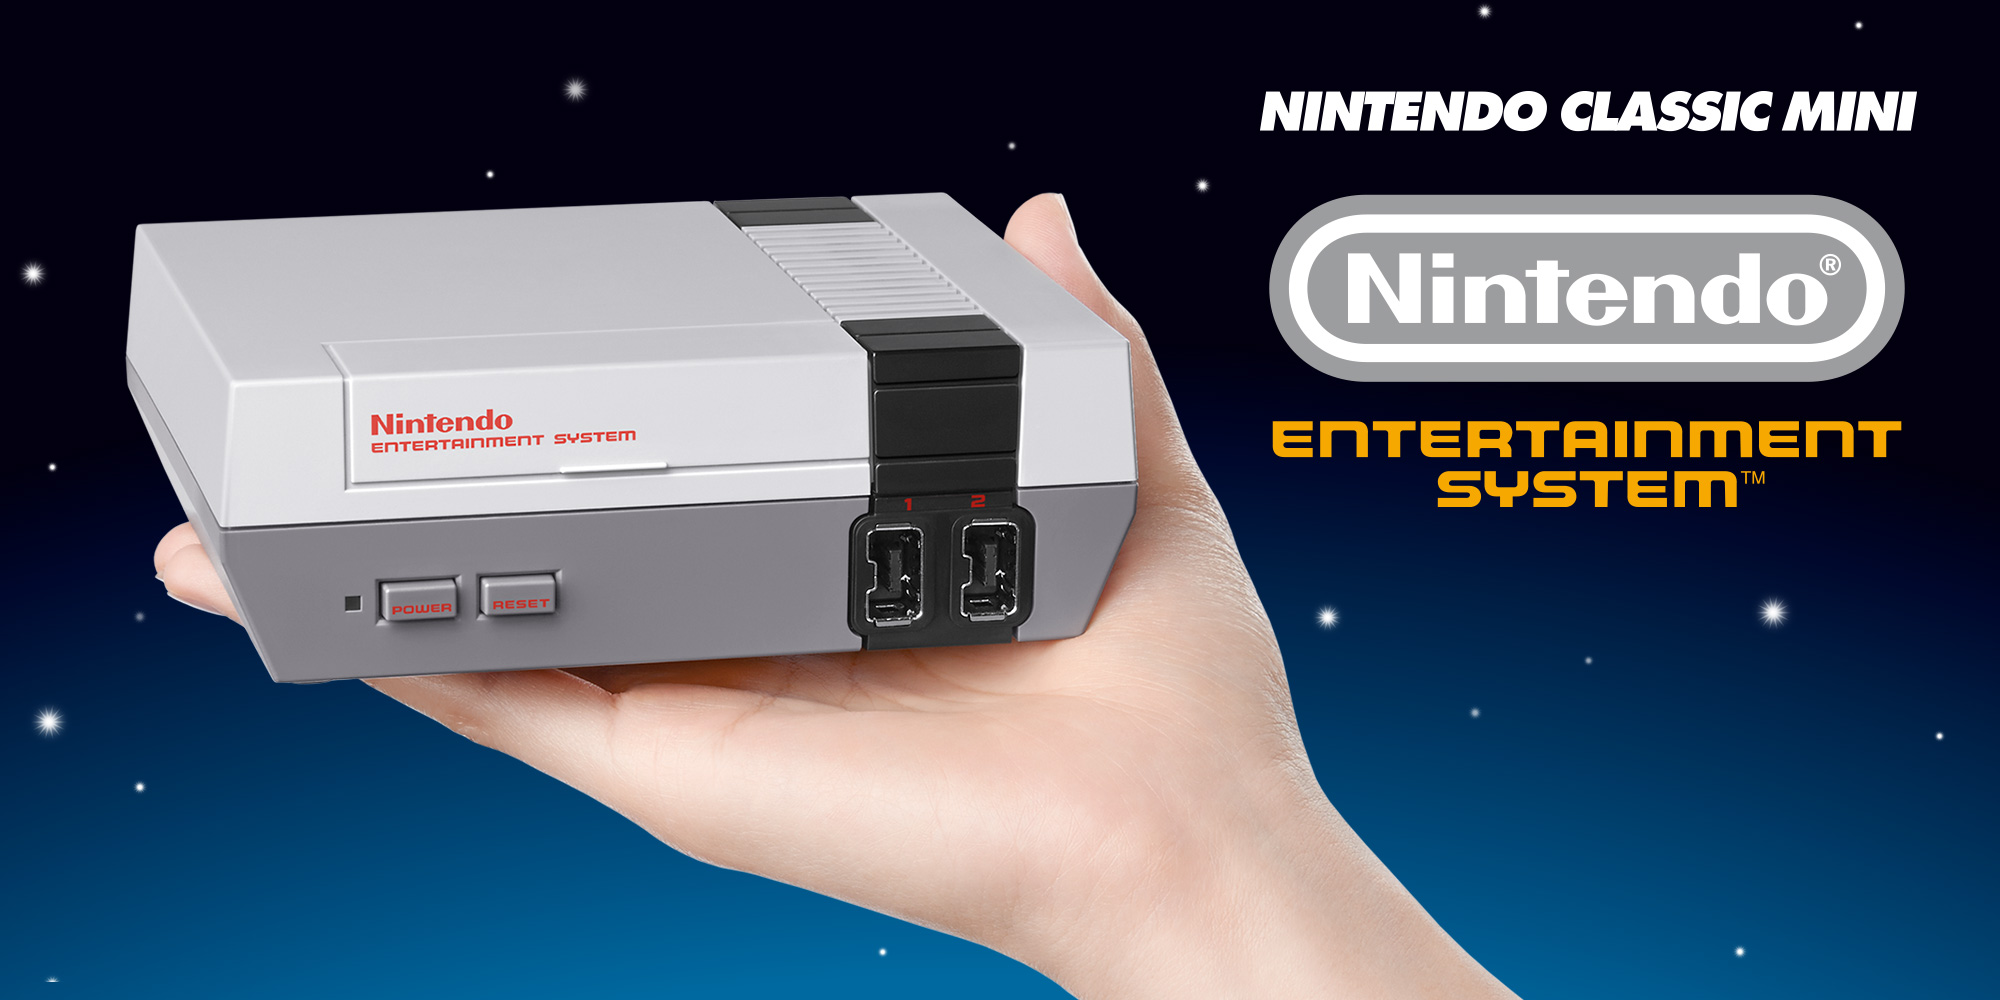 La console Nintendo Classic Mini: Nintendo Entertainment System sera disponible le 10 novembre et proposera 30 classiques de la NES